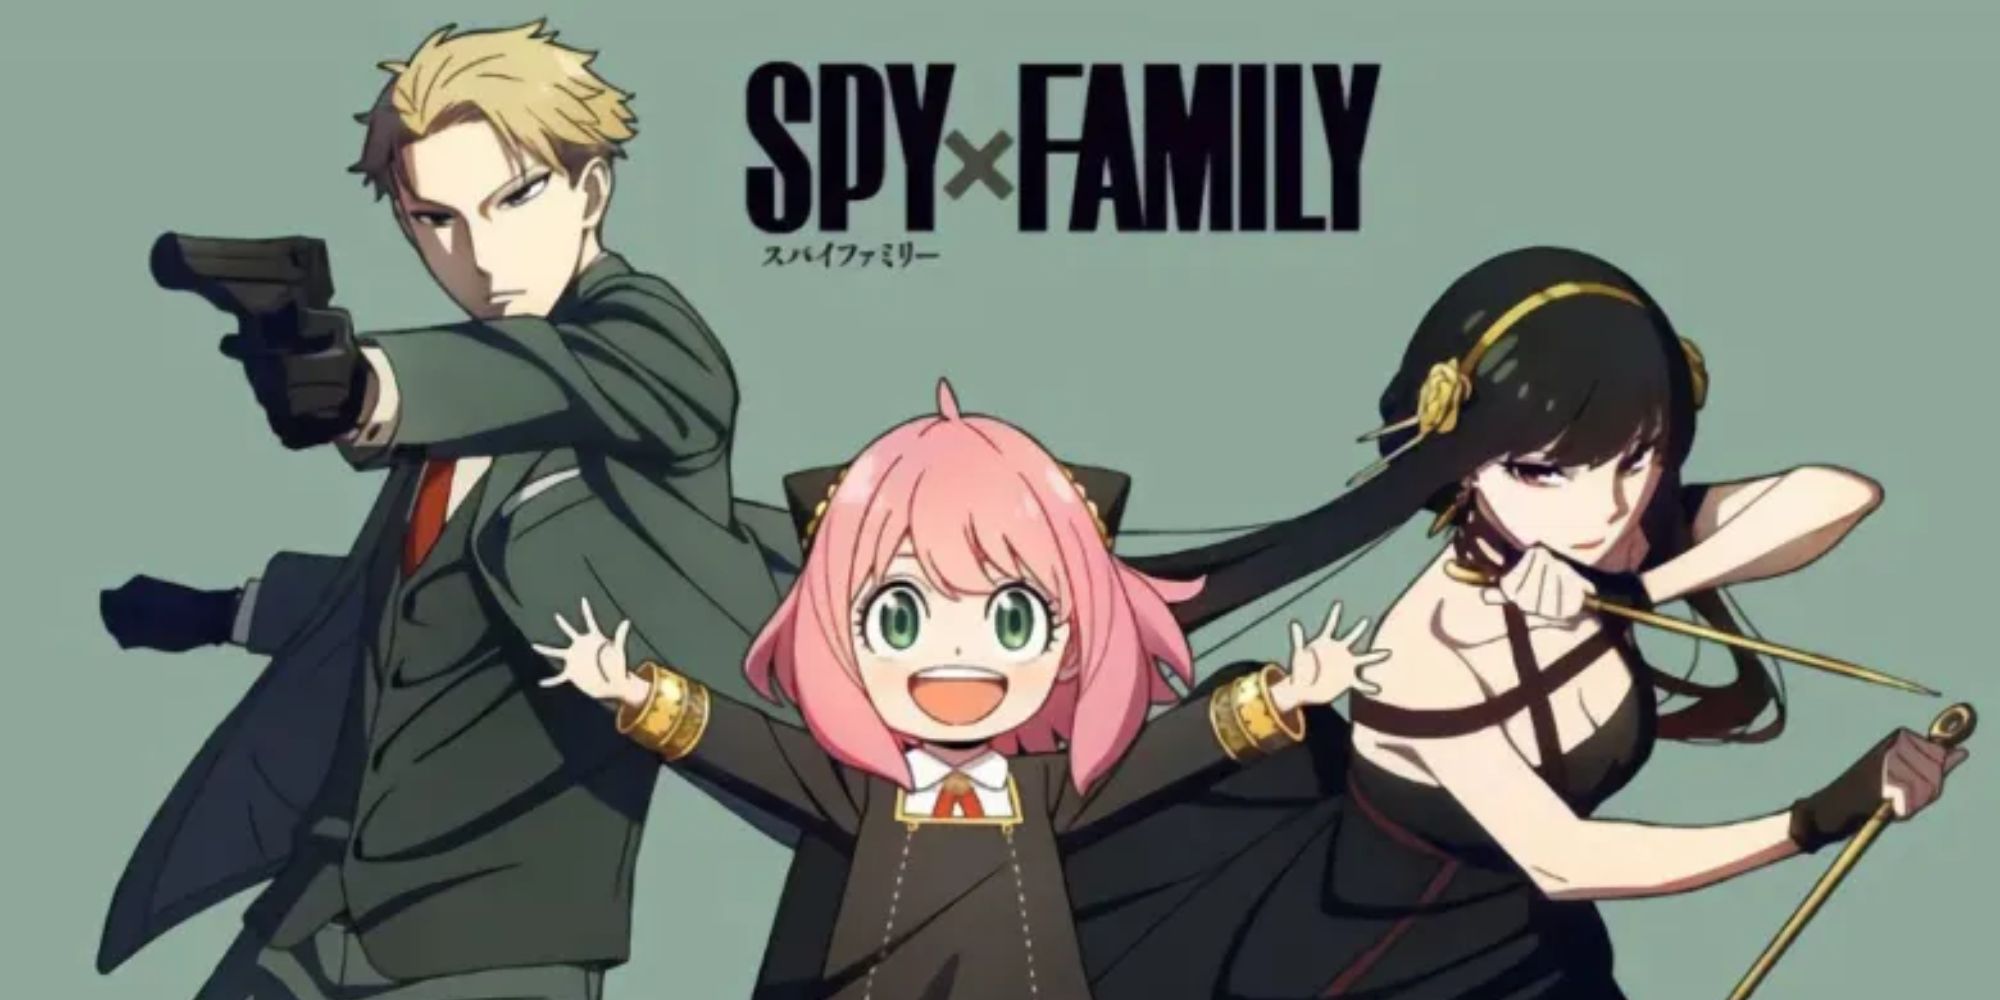 The three main characters from Spy x Family.